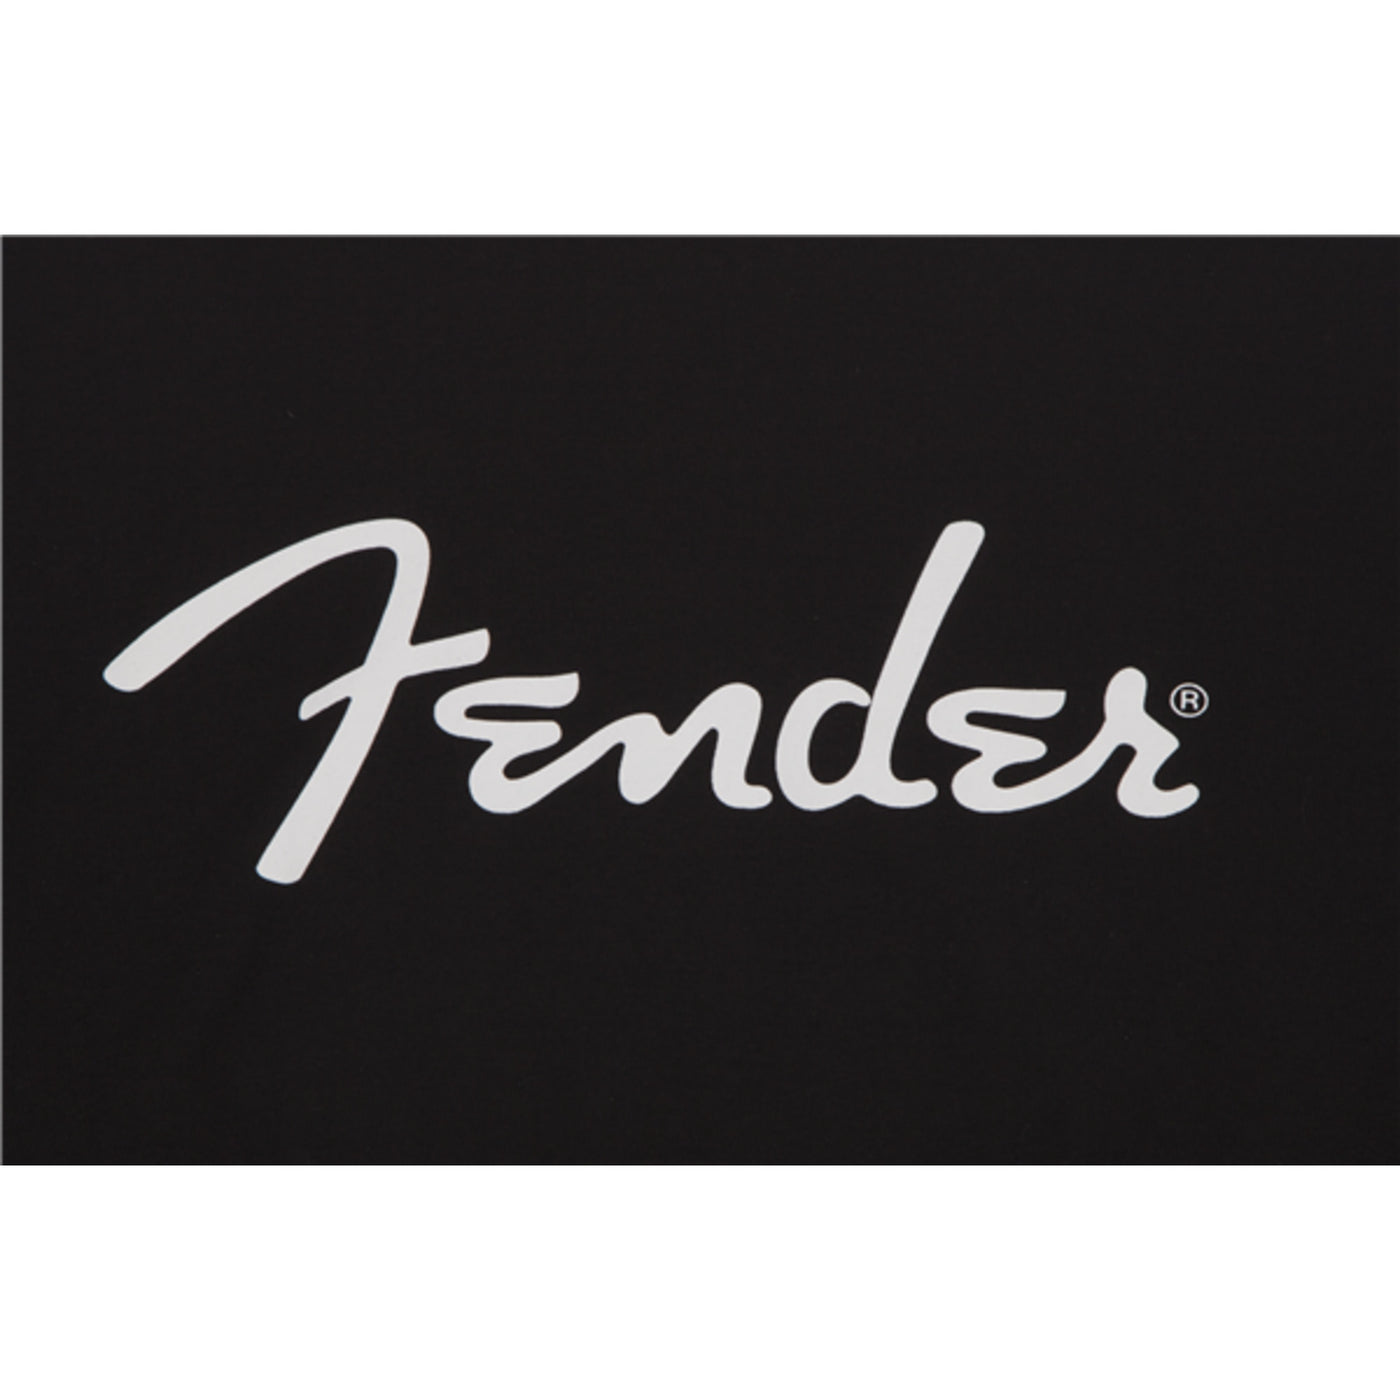 Fender Spaghetti Logo T-Shirt - Black, XL (9101000606)